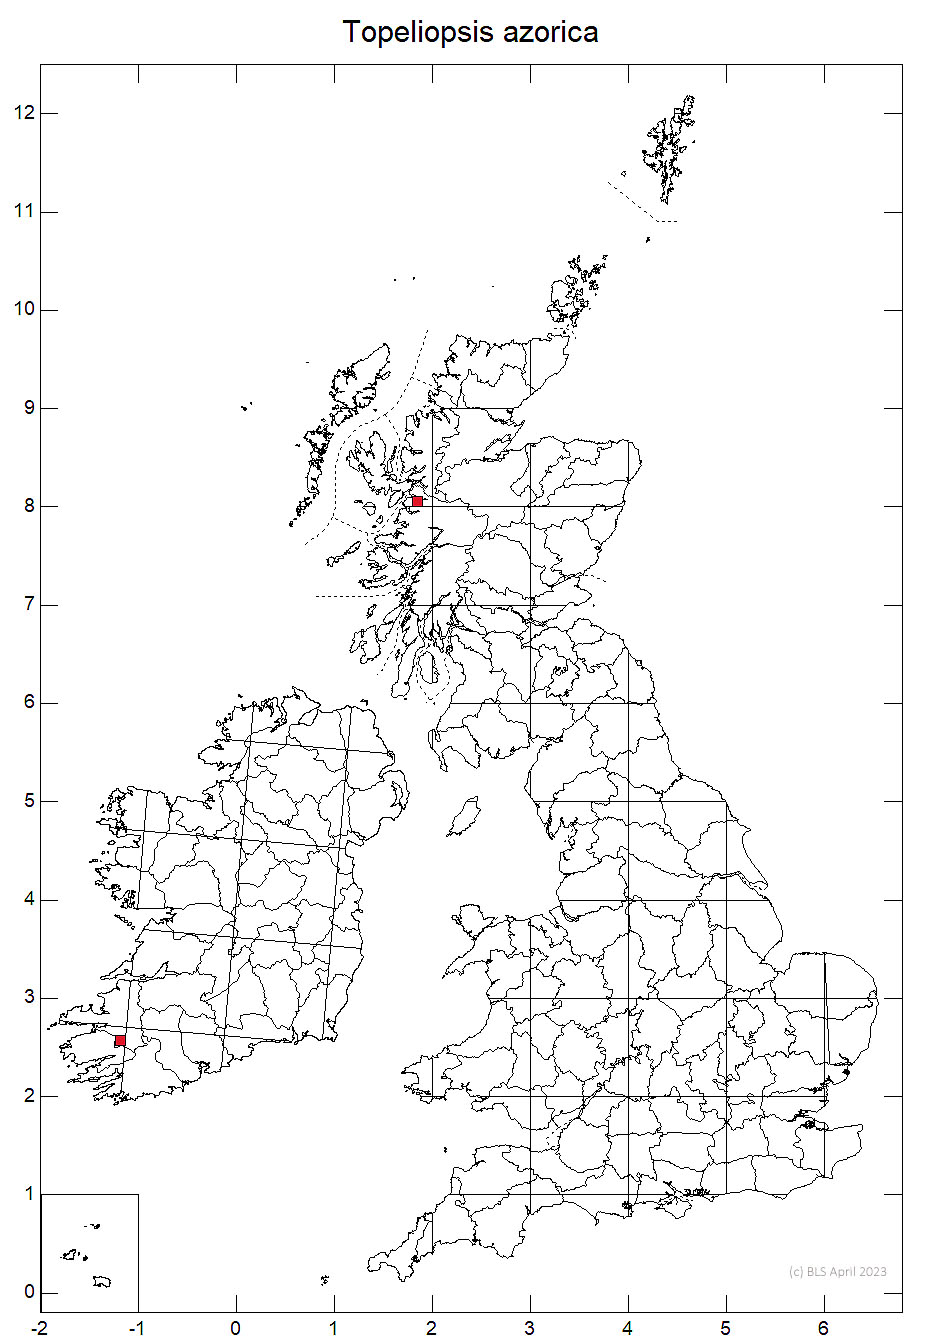 Topeliopsis azorica 10km sq distribution map